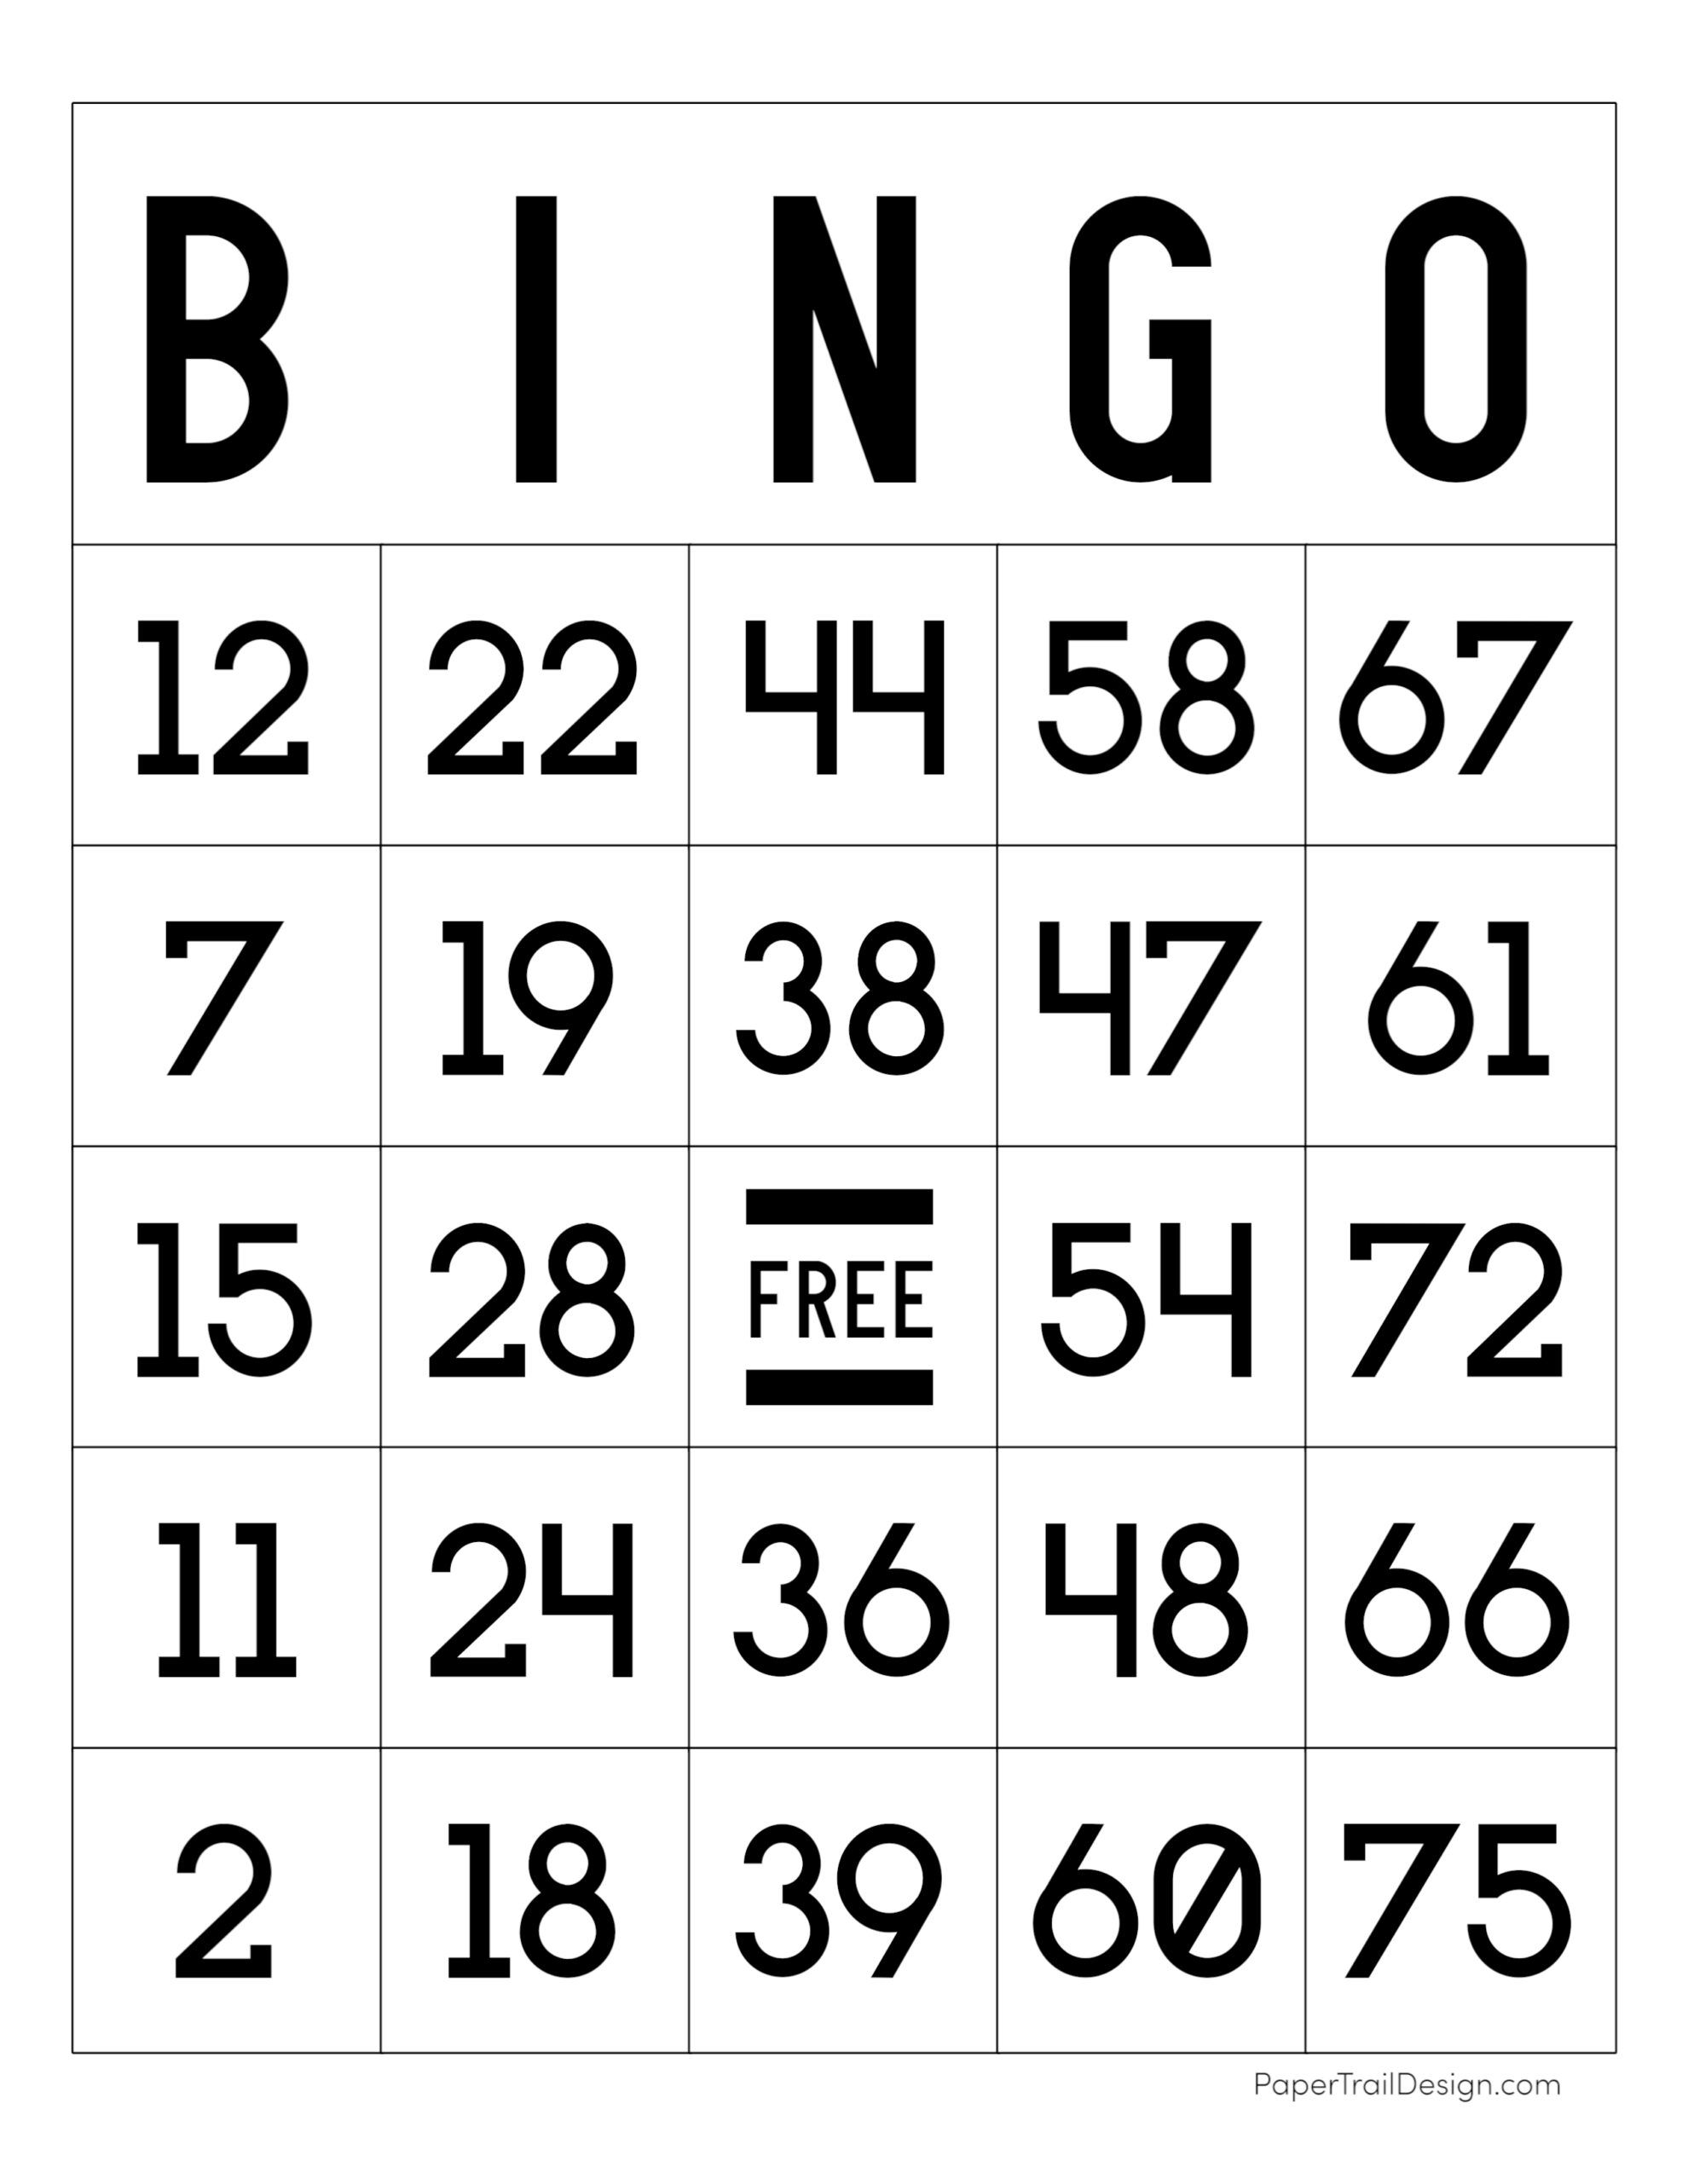 free-printable-bingo-cards-paper-trail-design